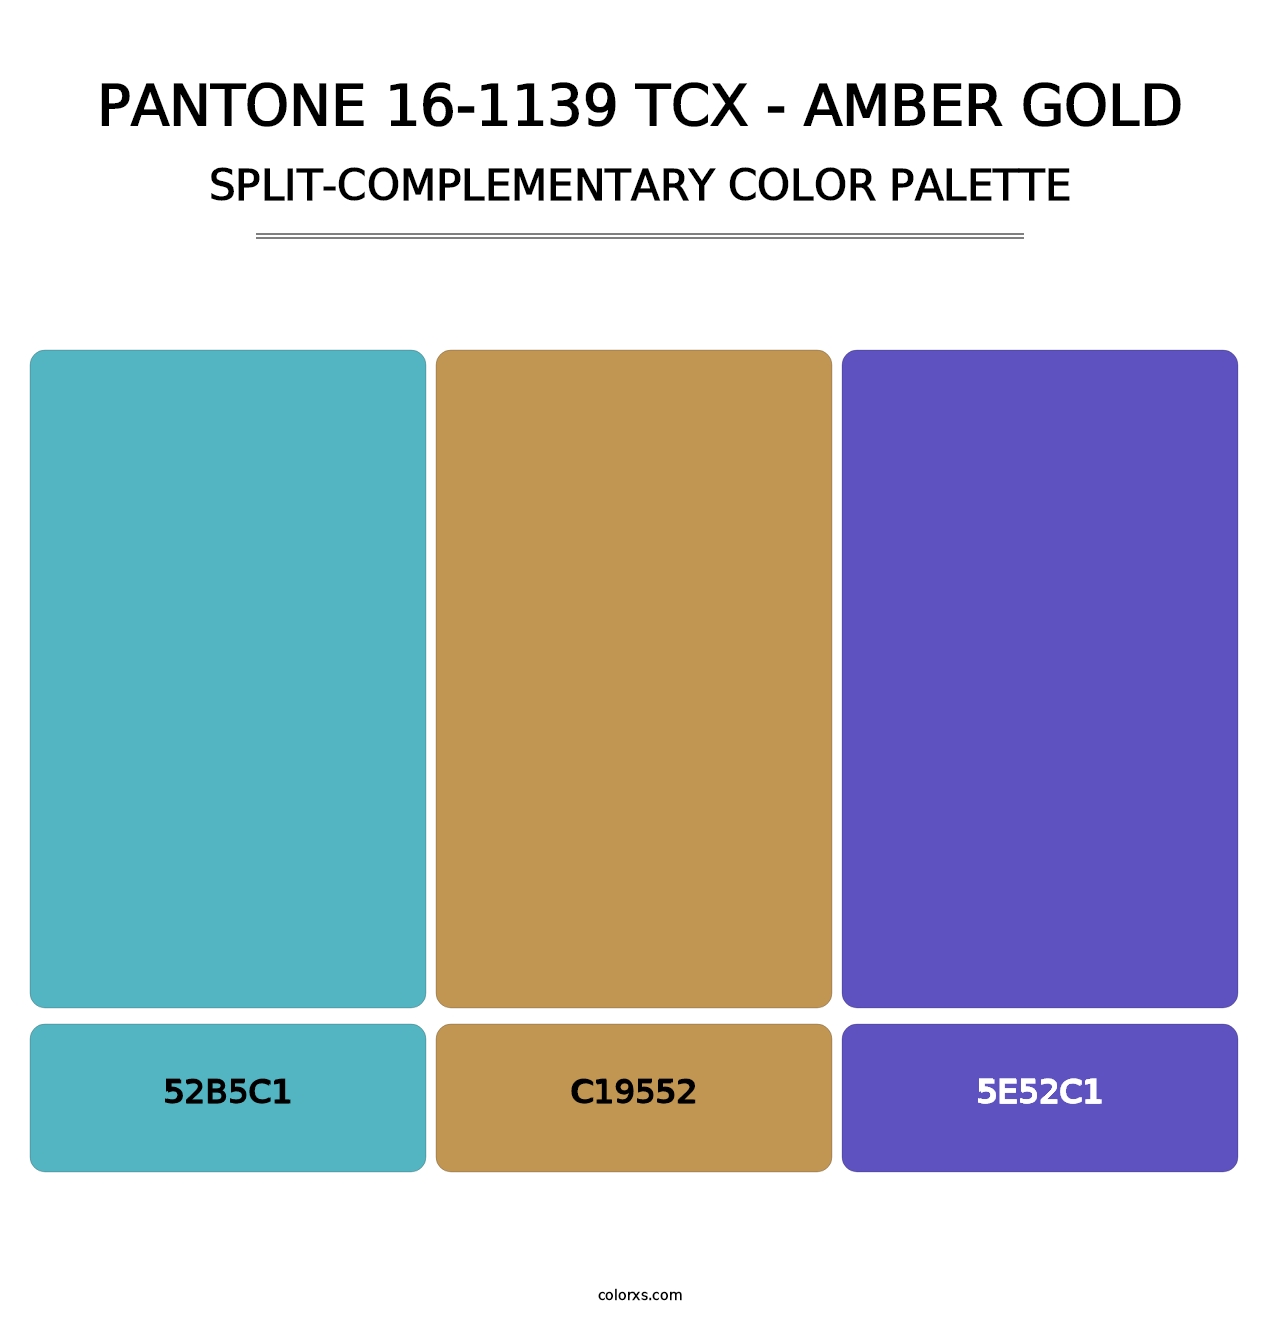 PANTONE 16-1139 TCX - Amber Gold - Split-Complementary Color Palette